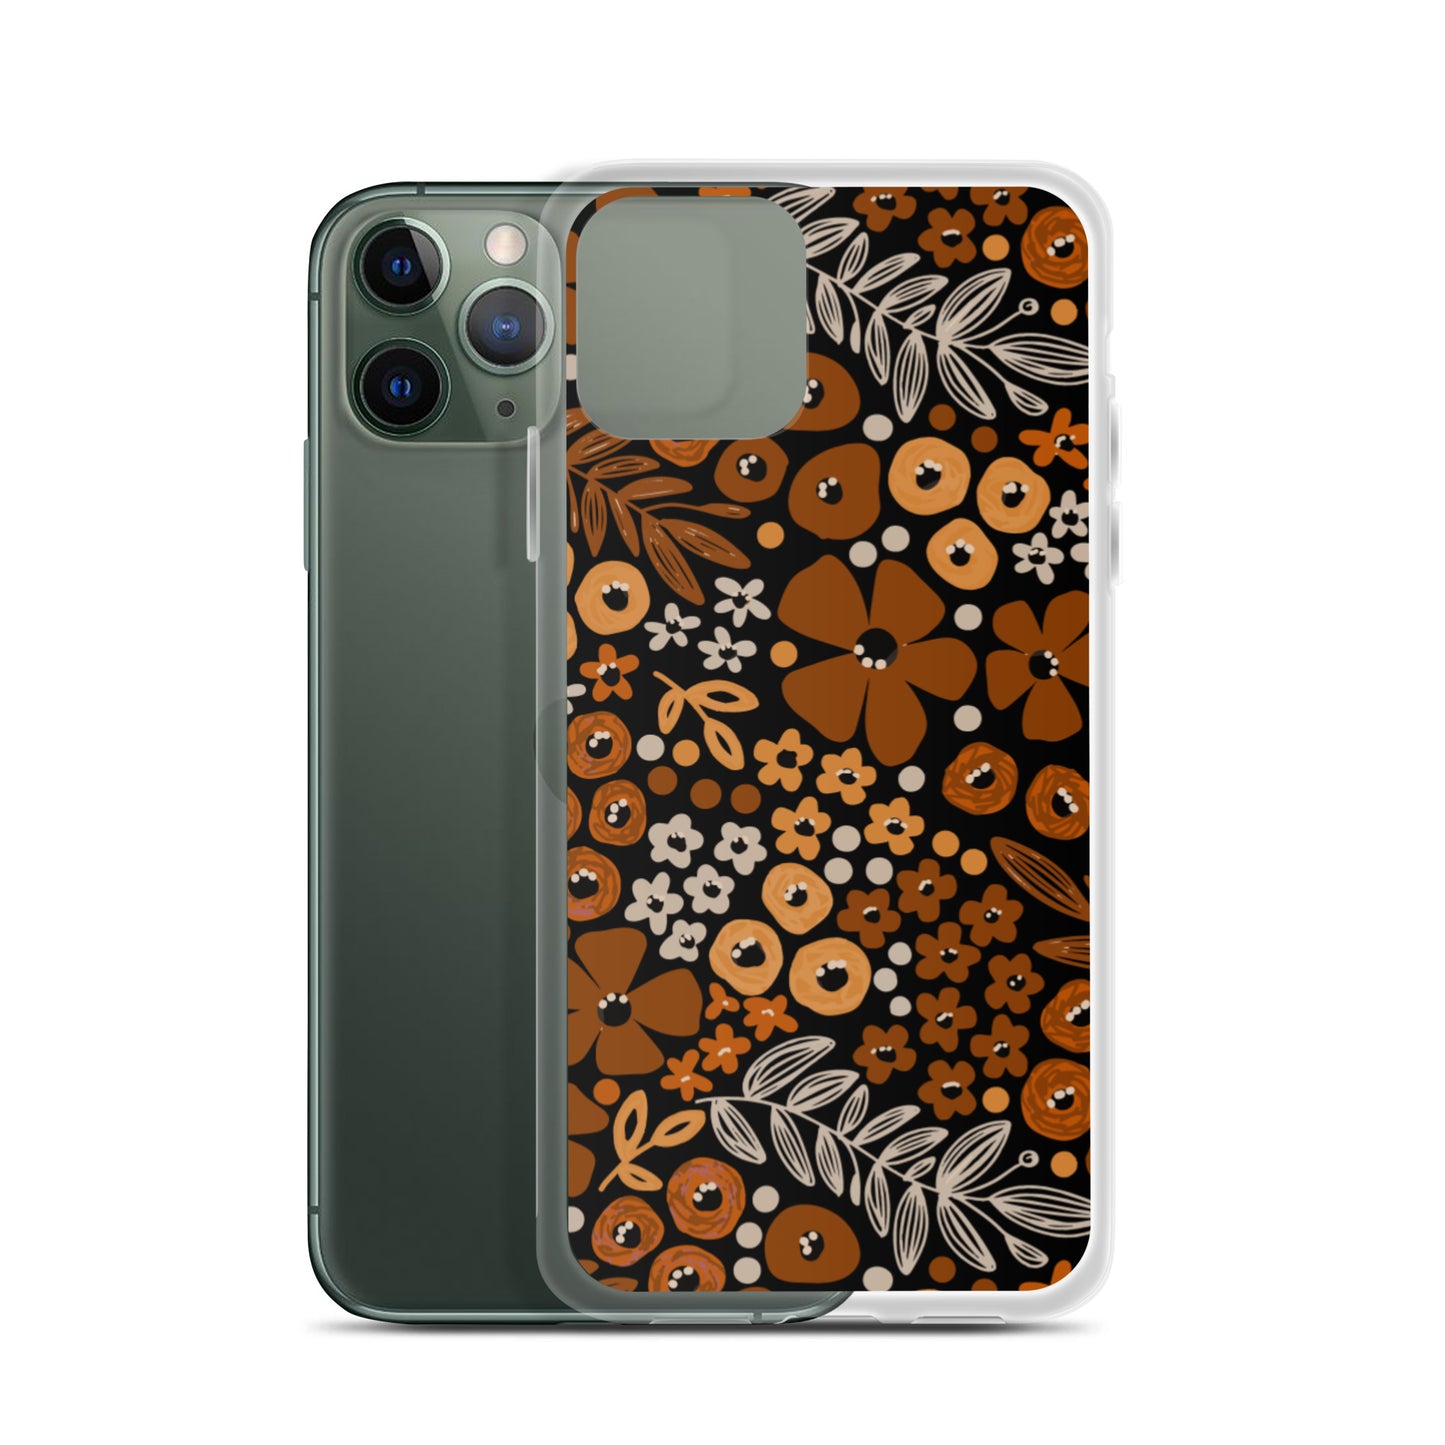 Autumn Floral iPhone Case